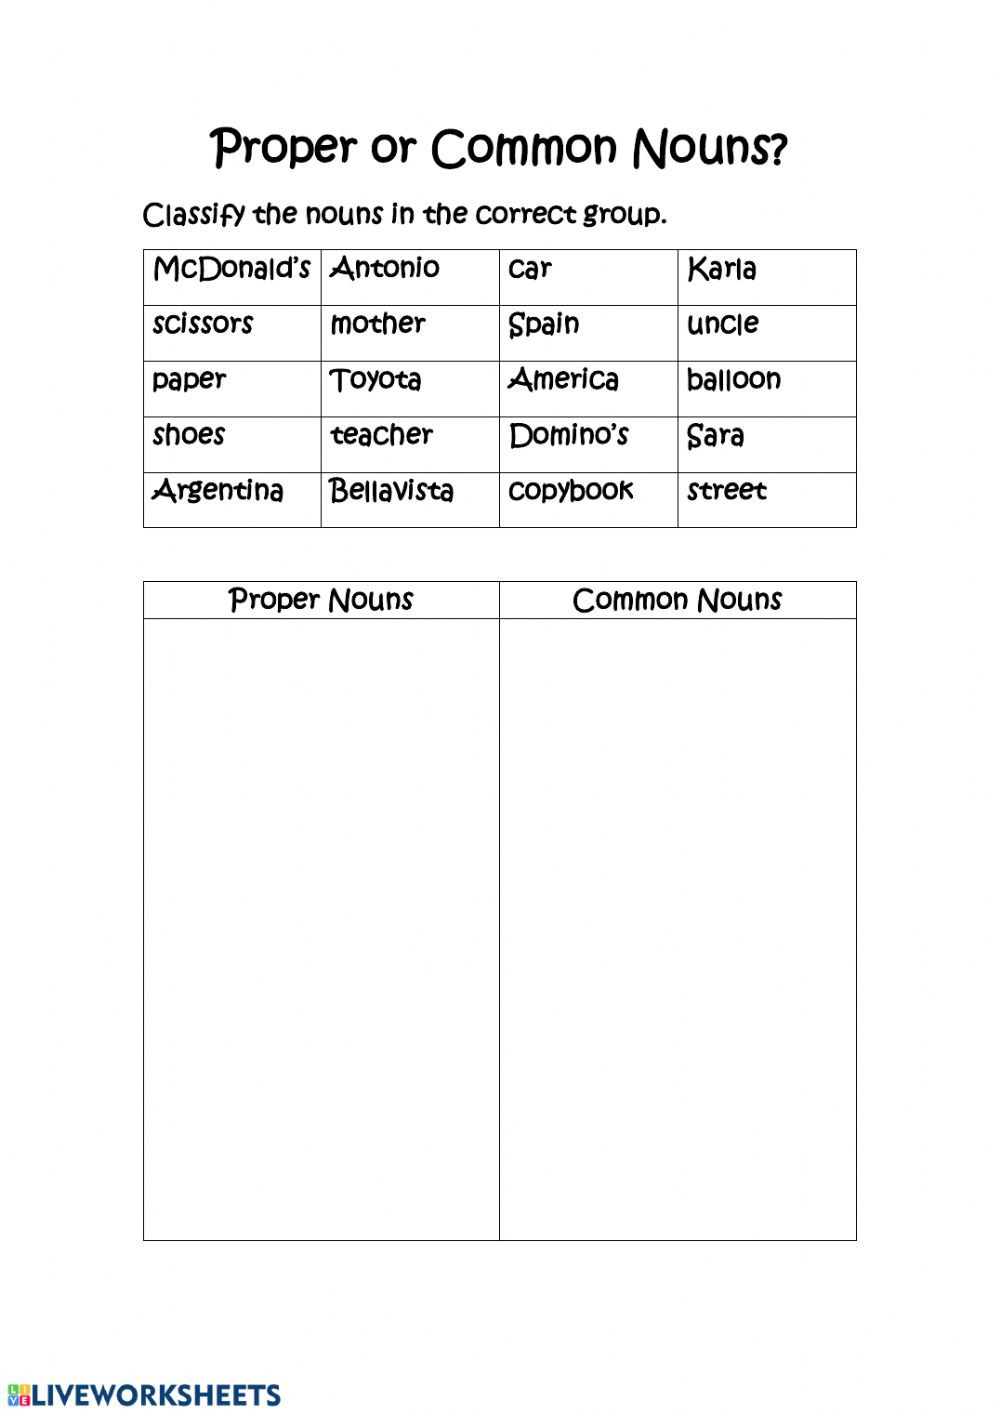 Proper Nouns Worksheet 2nd Grade Proper or Mon Nouns Interactive Worksheet